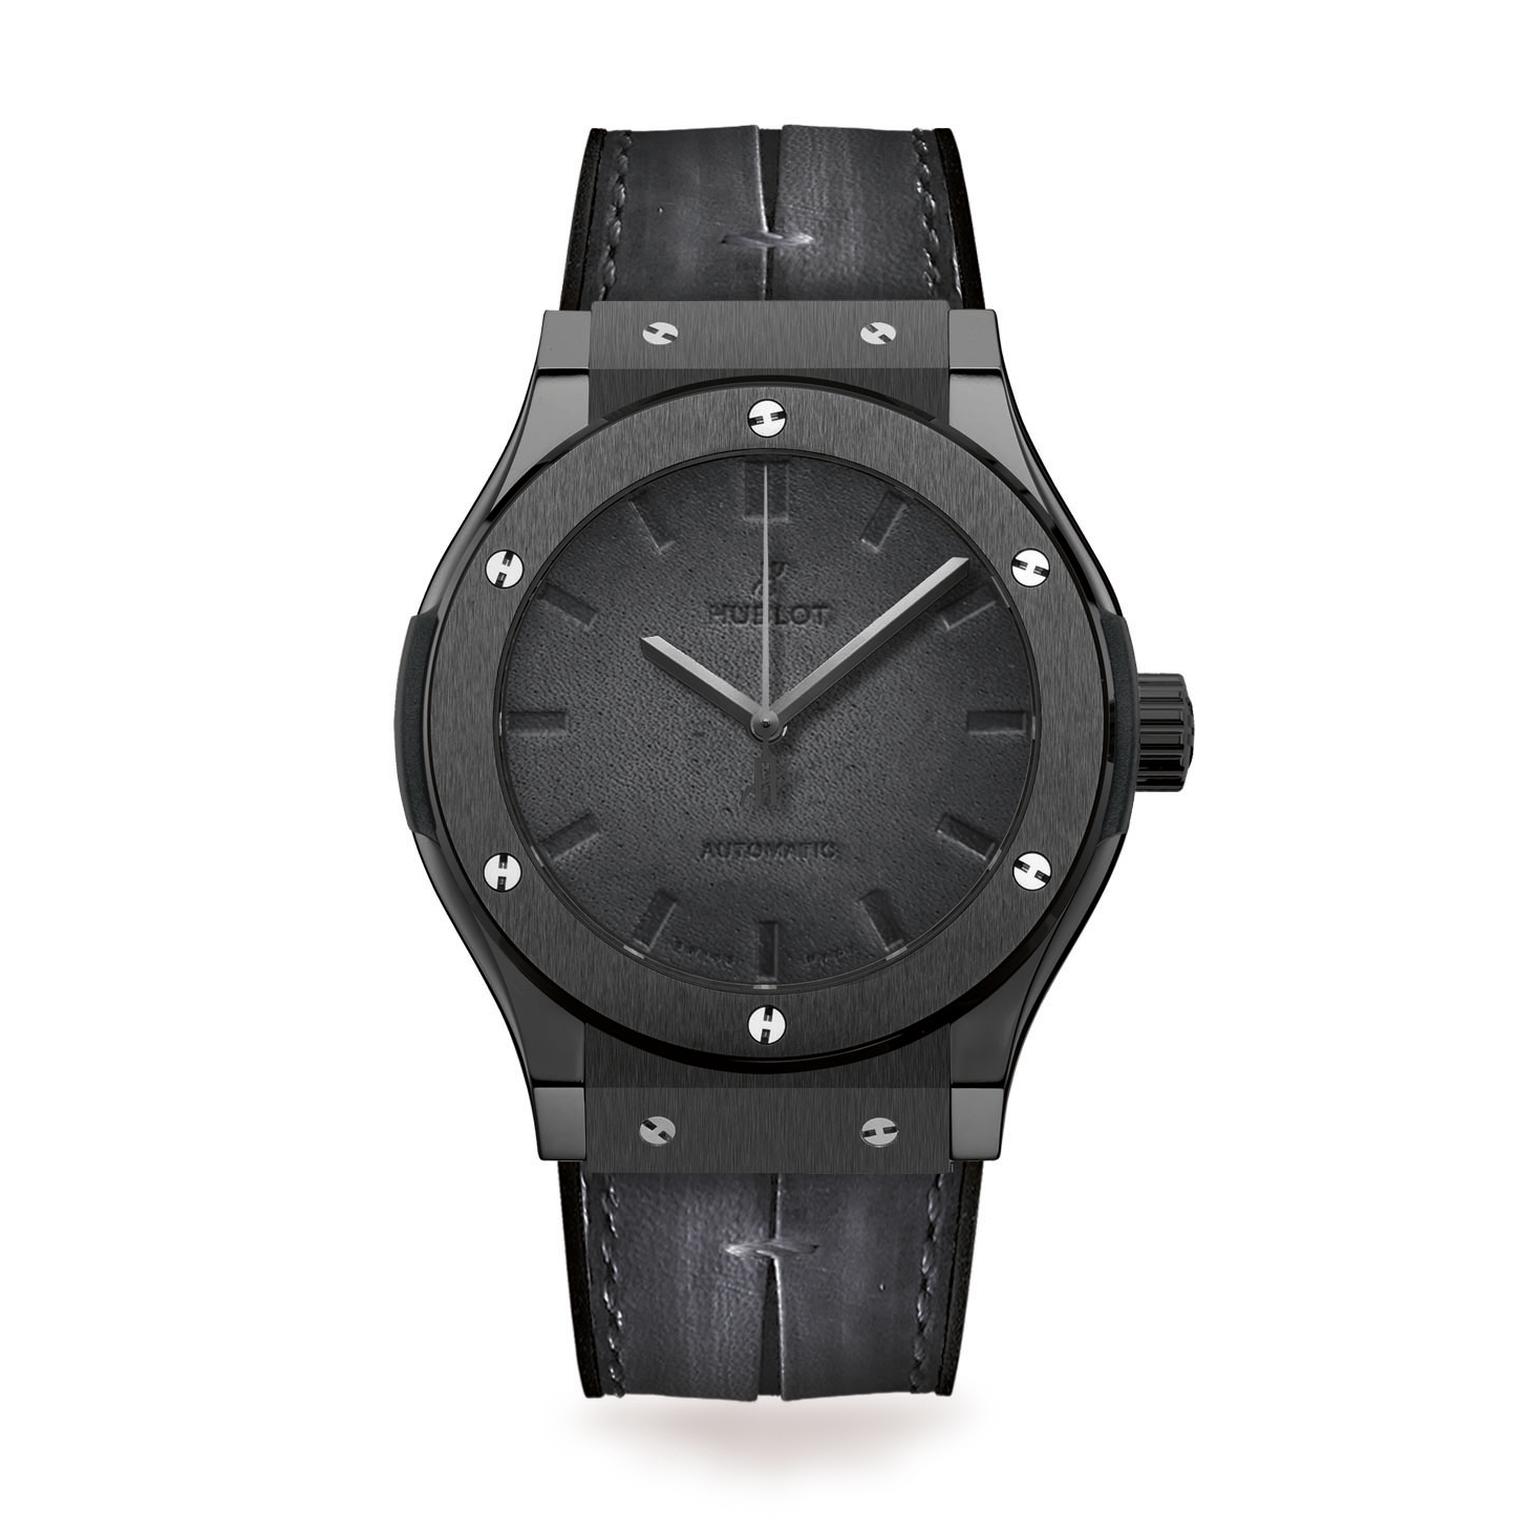 Hublot Classic Fusion watch with Berluti black leather strap